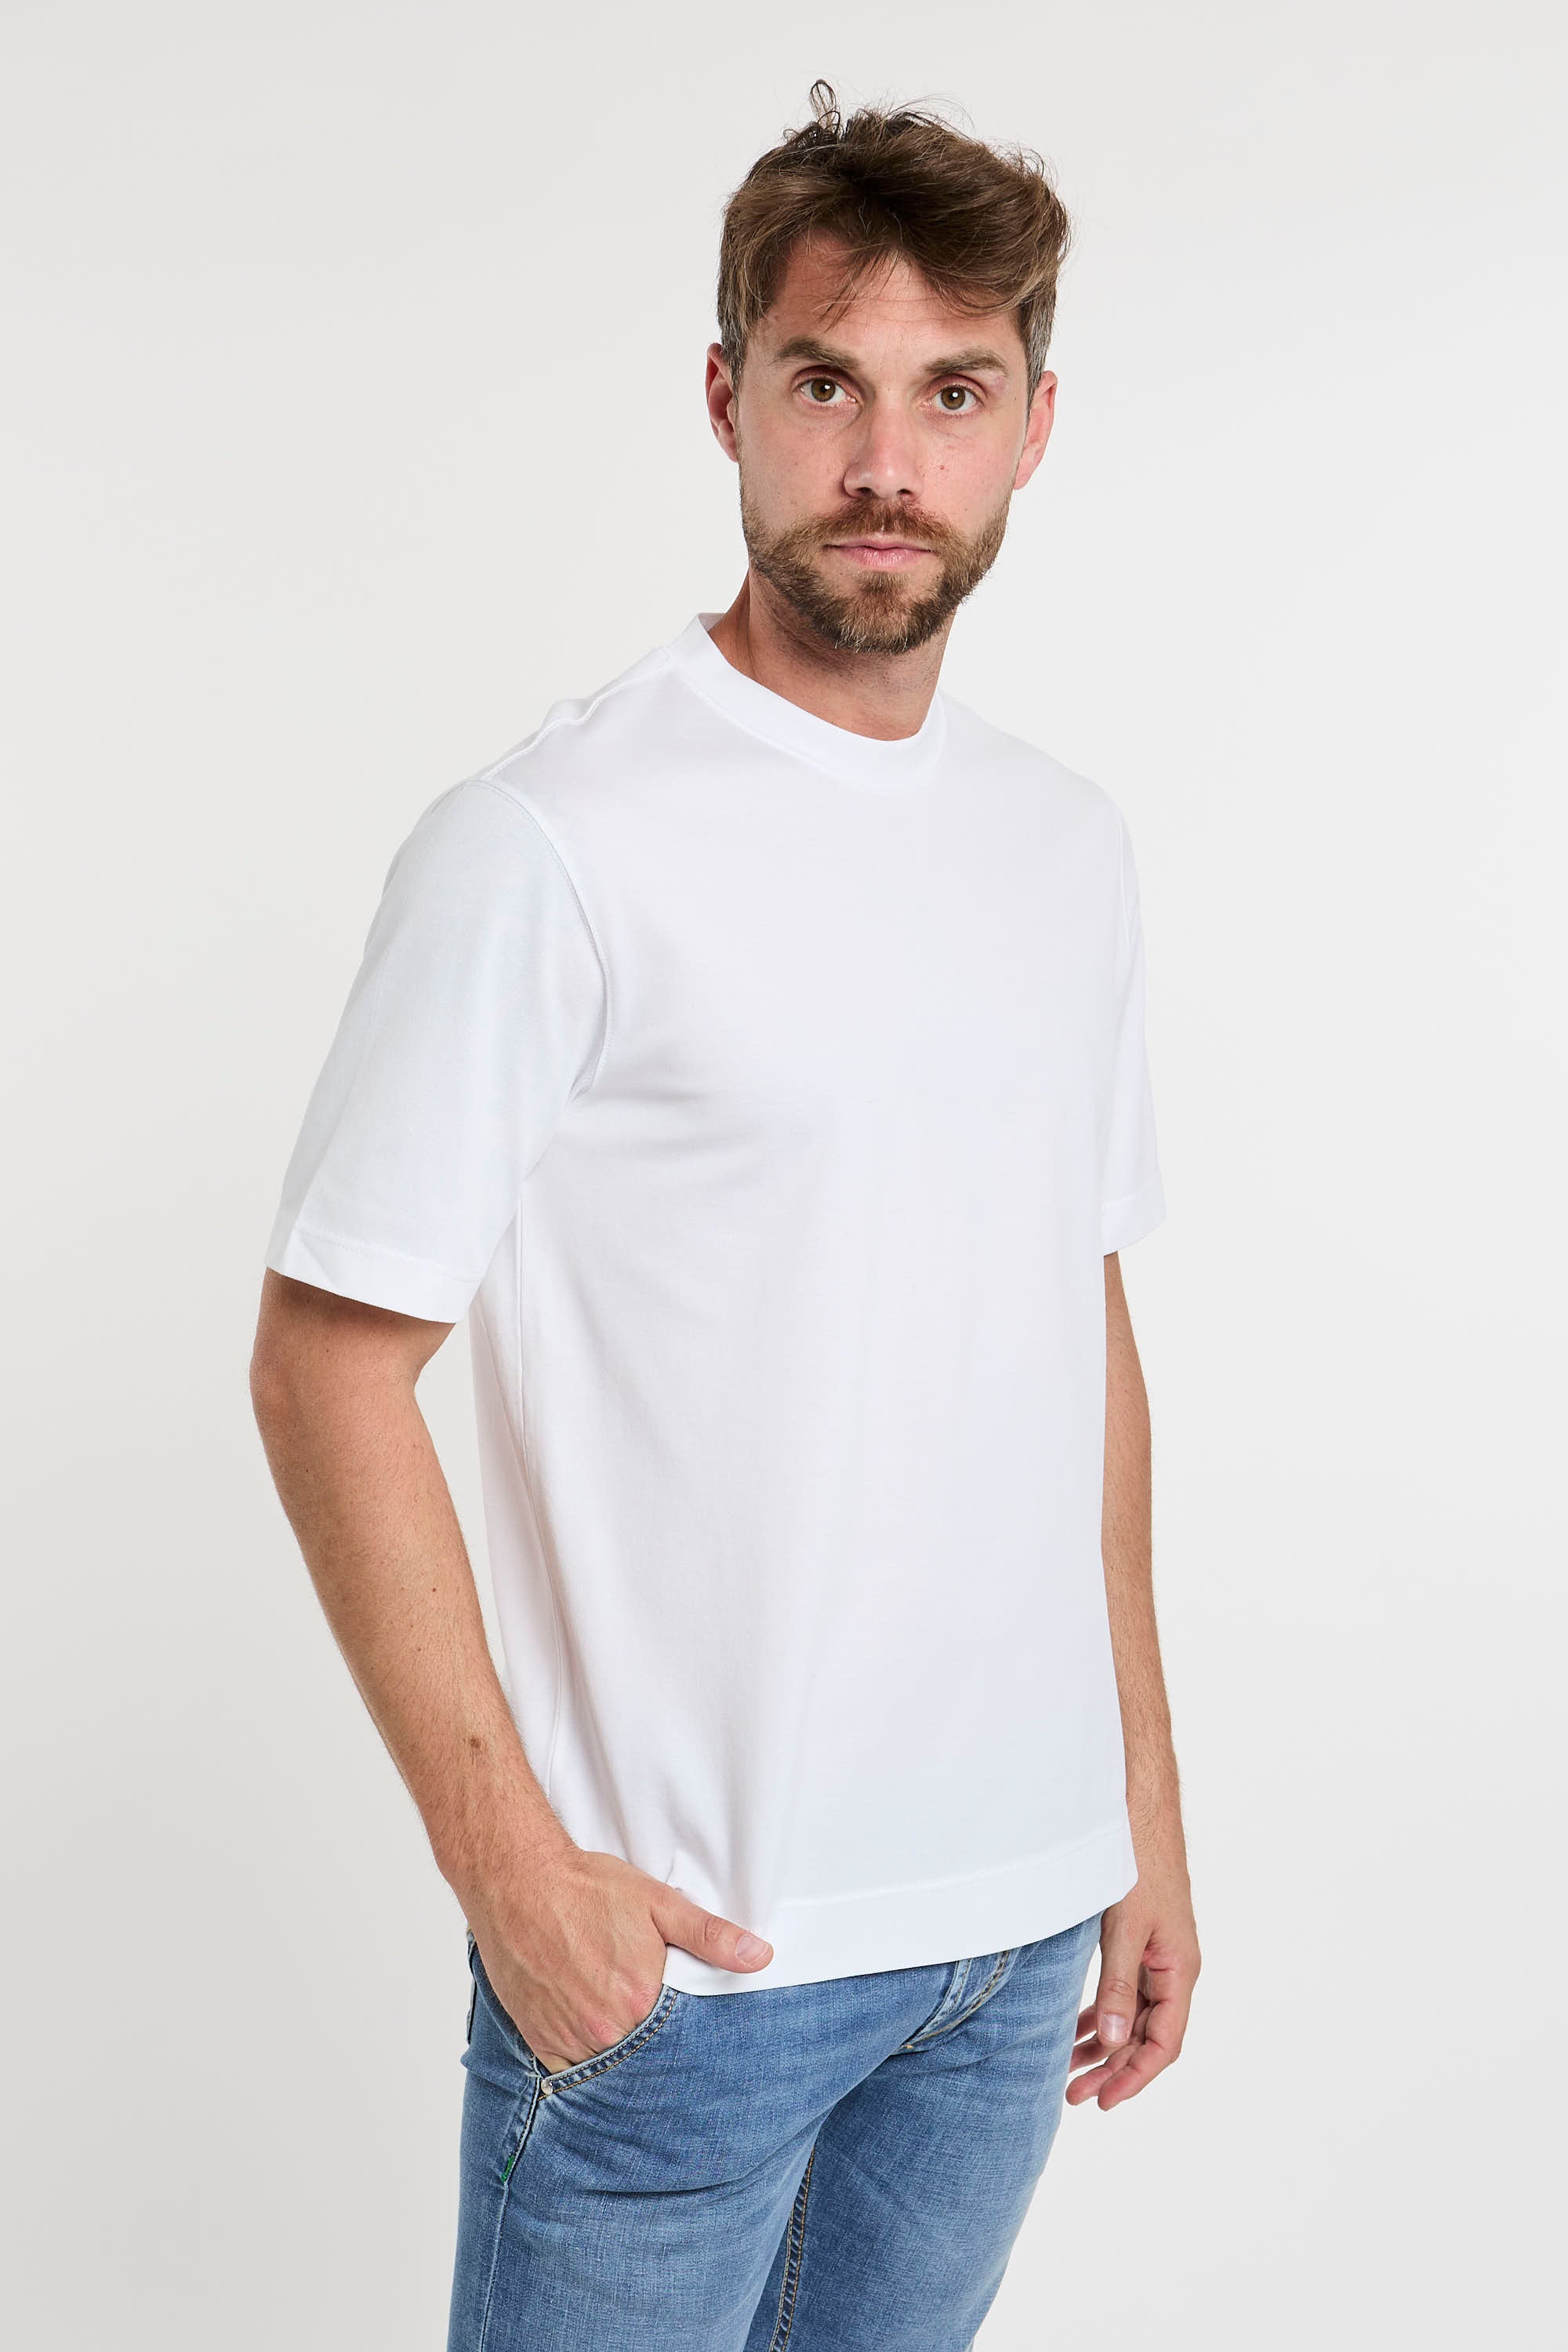 Circolo 1901 T-Shirt Cotton White 6505-1